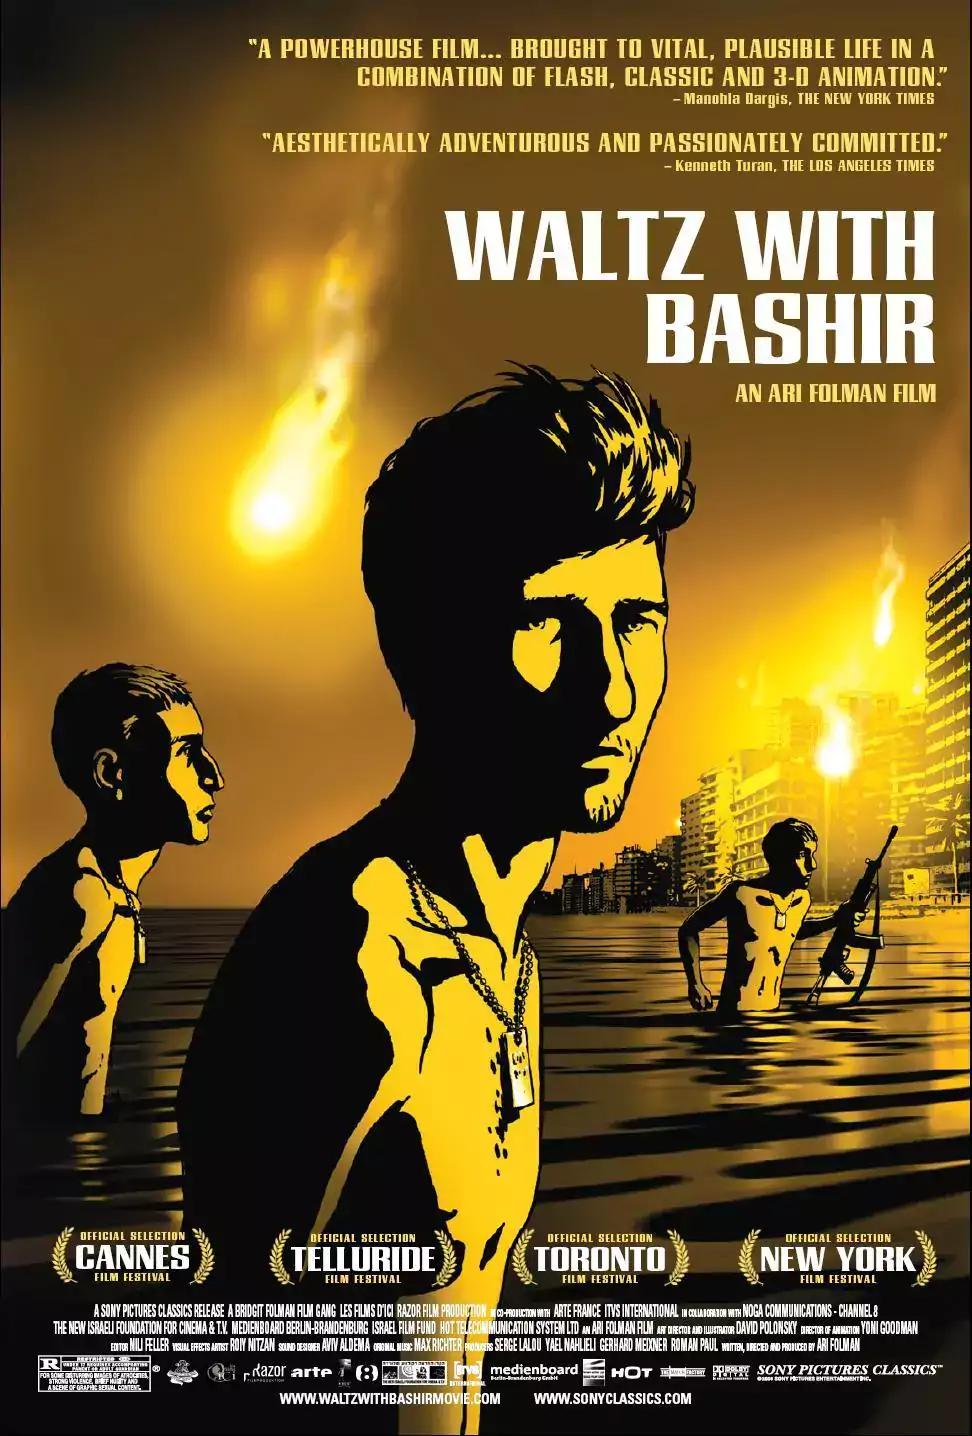 Waltz Im Bashir / Waltz with Bashir (2008) - IMDb: 8.0